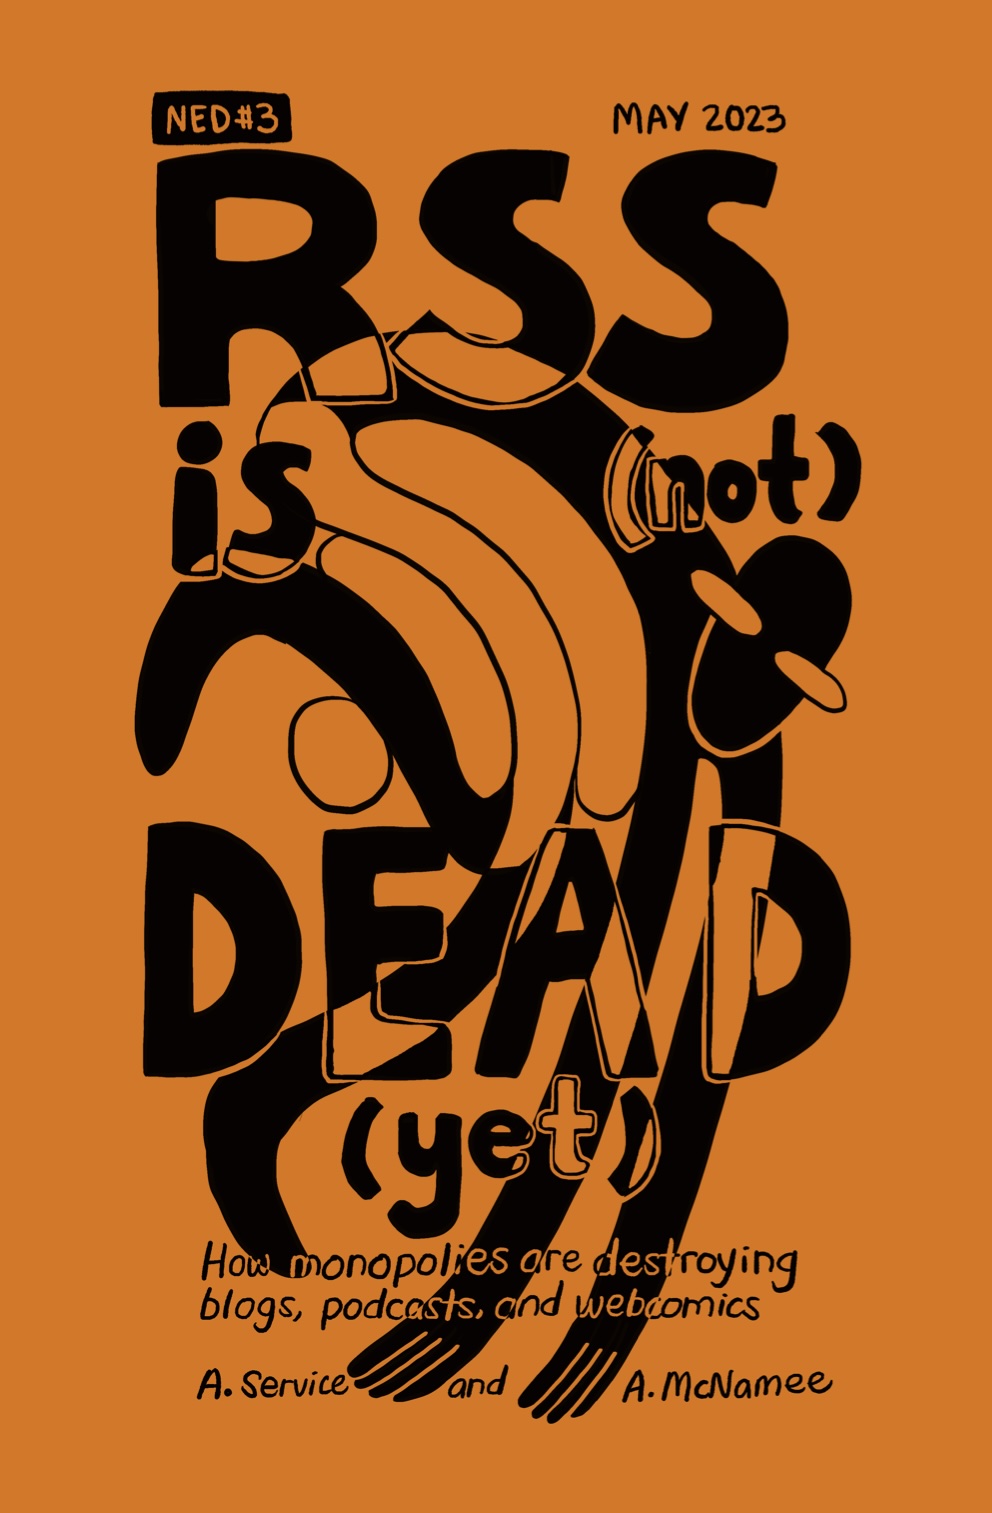 RSS is (not) dead (yet) (NED #3)